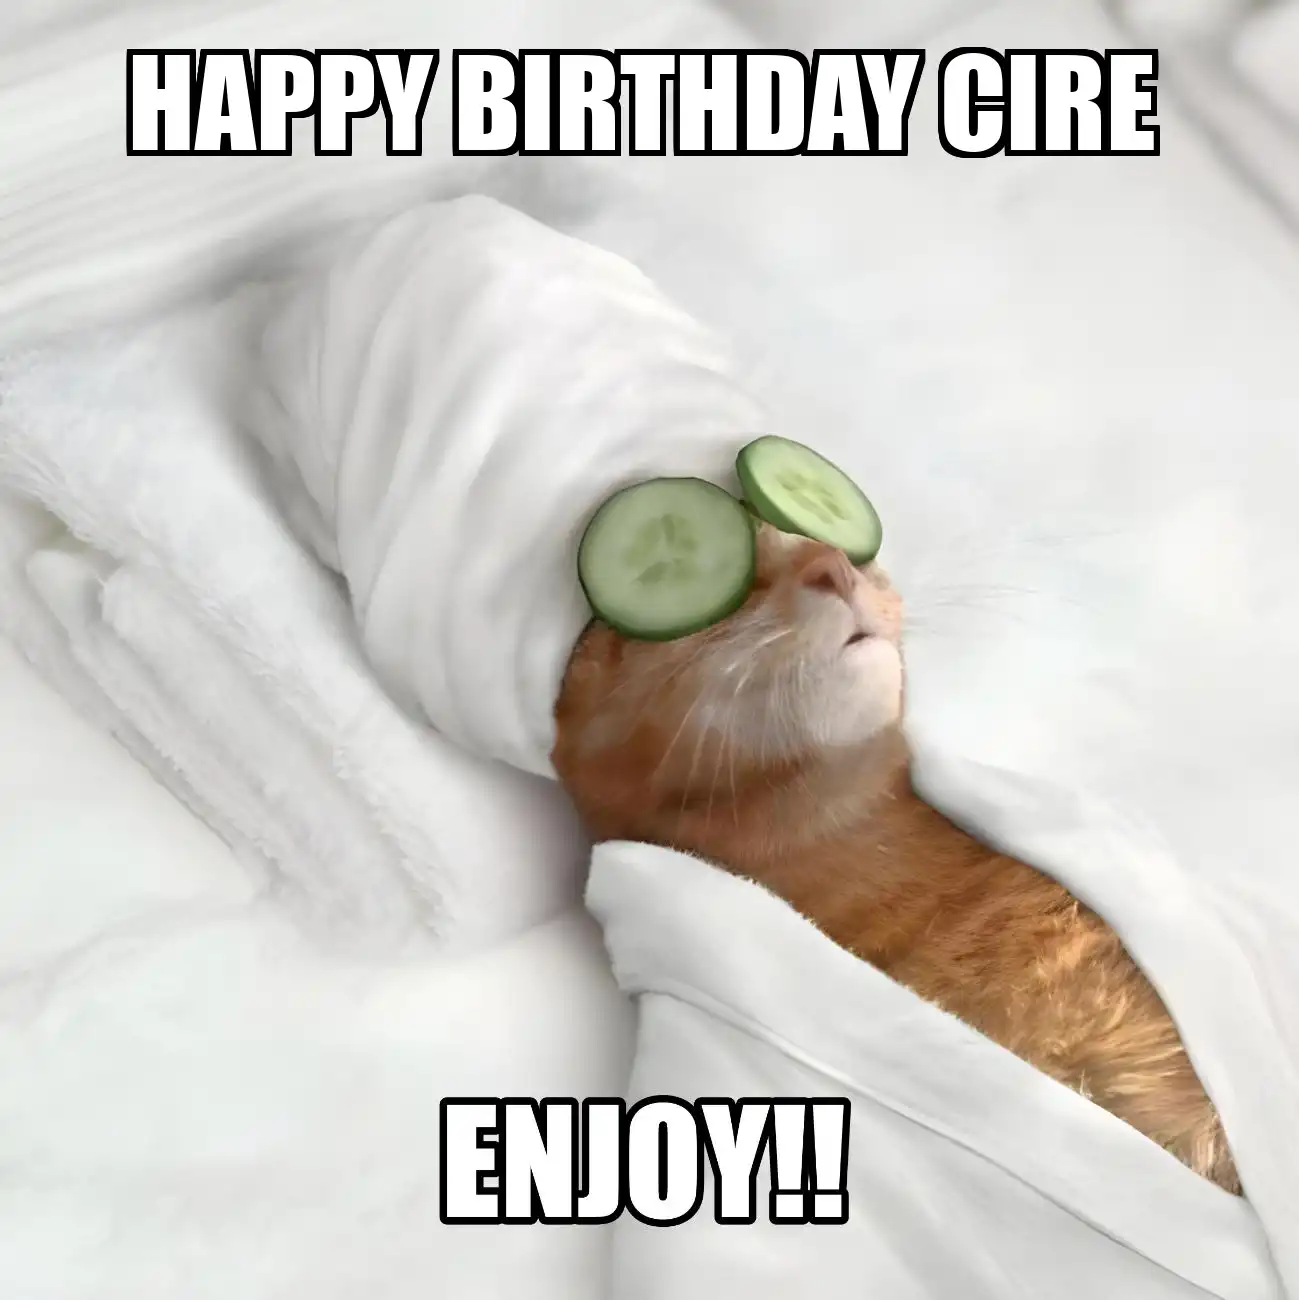 Happy Birthday Cire Enjoy Cat Meme